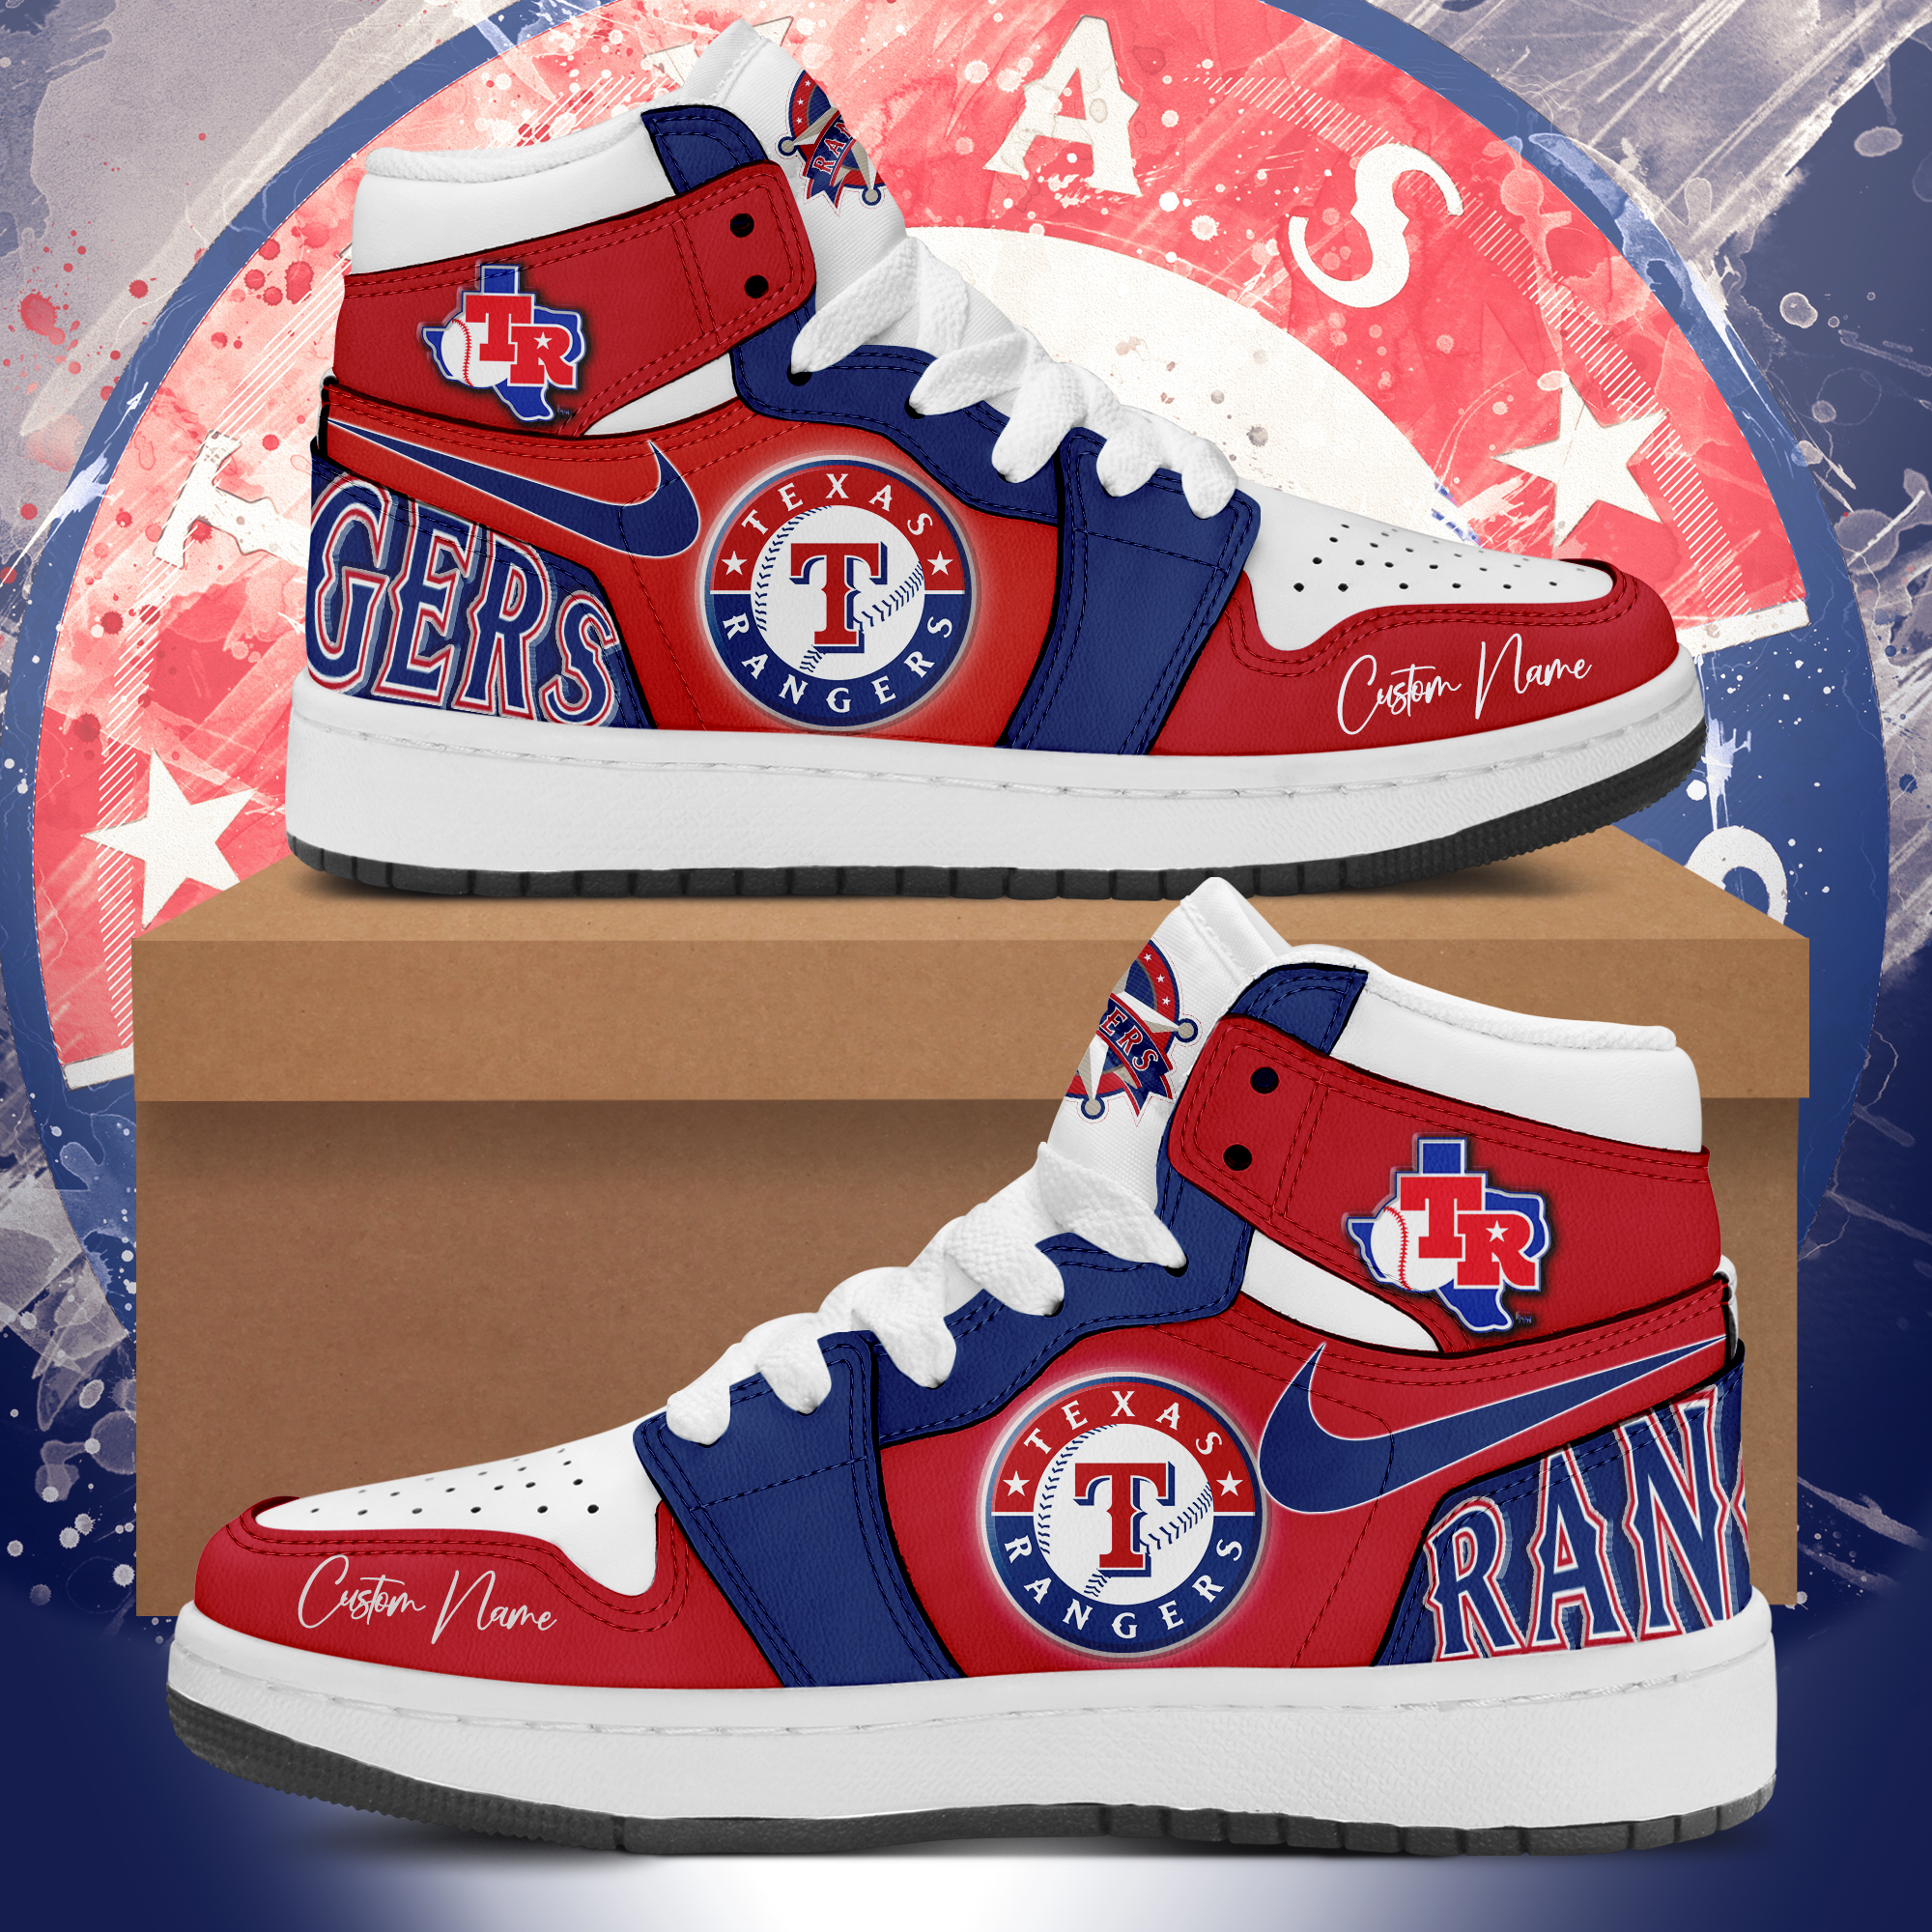 Texas Rangers #34 Cream Jersey - BTF Store